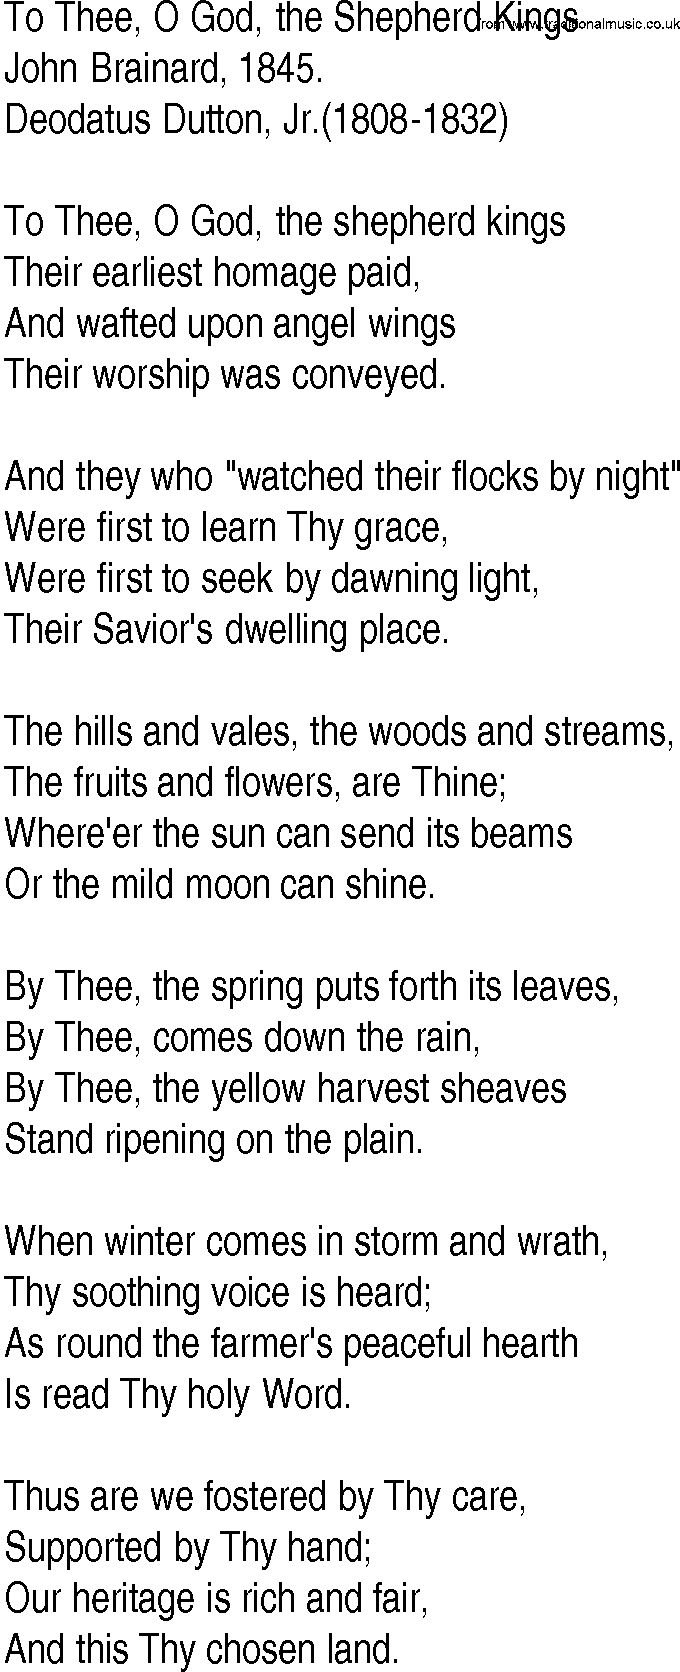 Hymn and Gospel Song: To Thee, O God, the Shepherd Kings by John Brainard lyrics